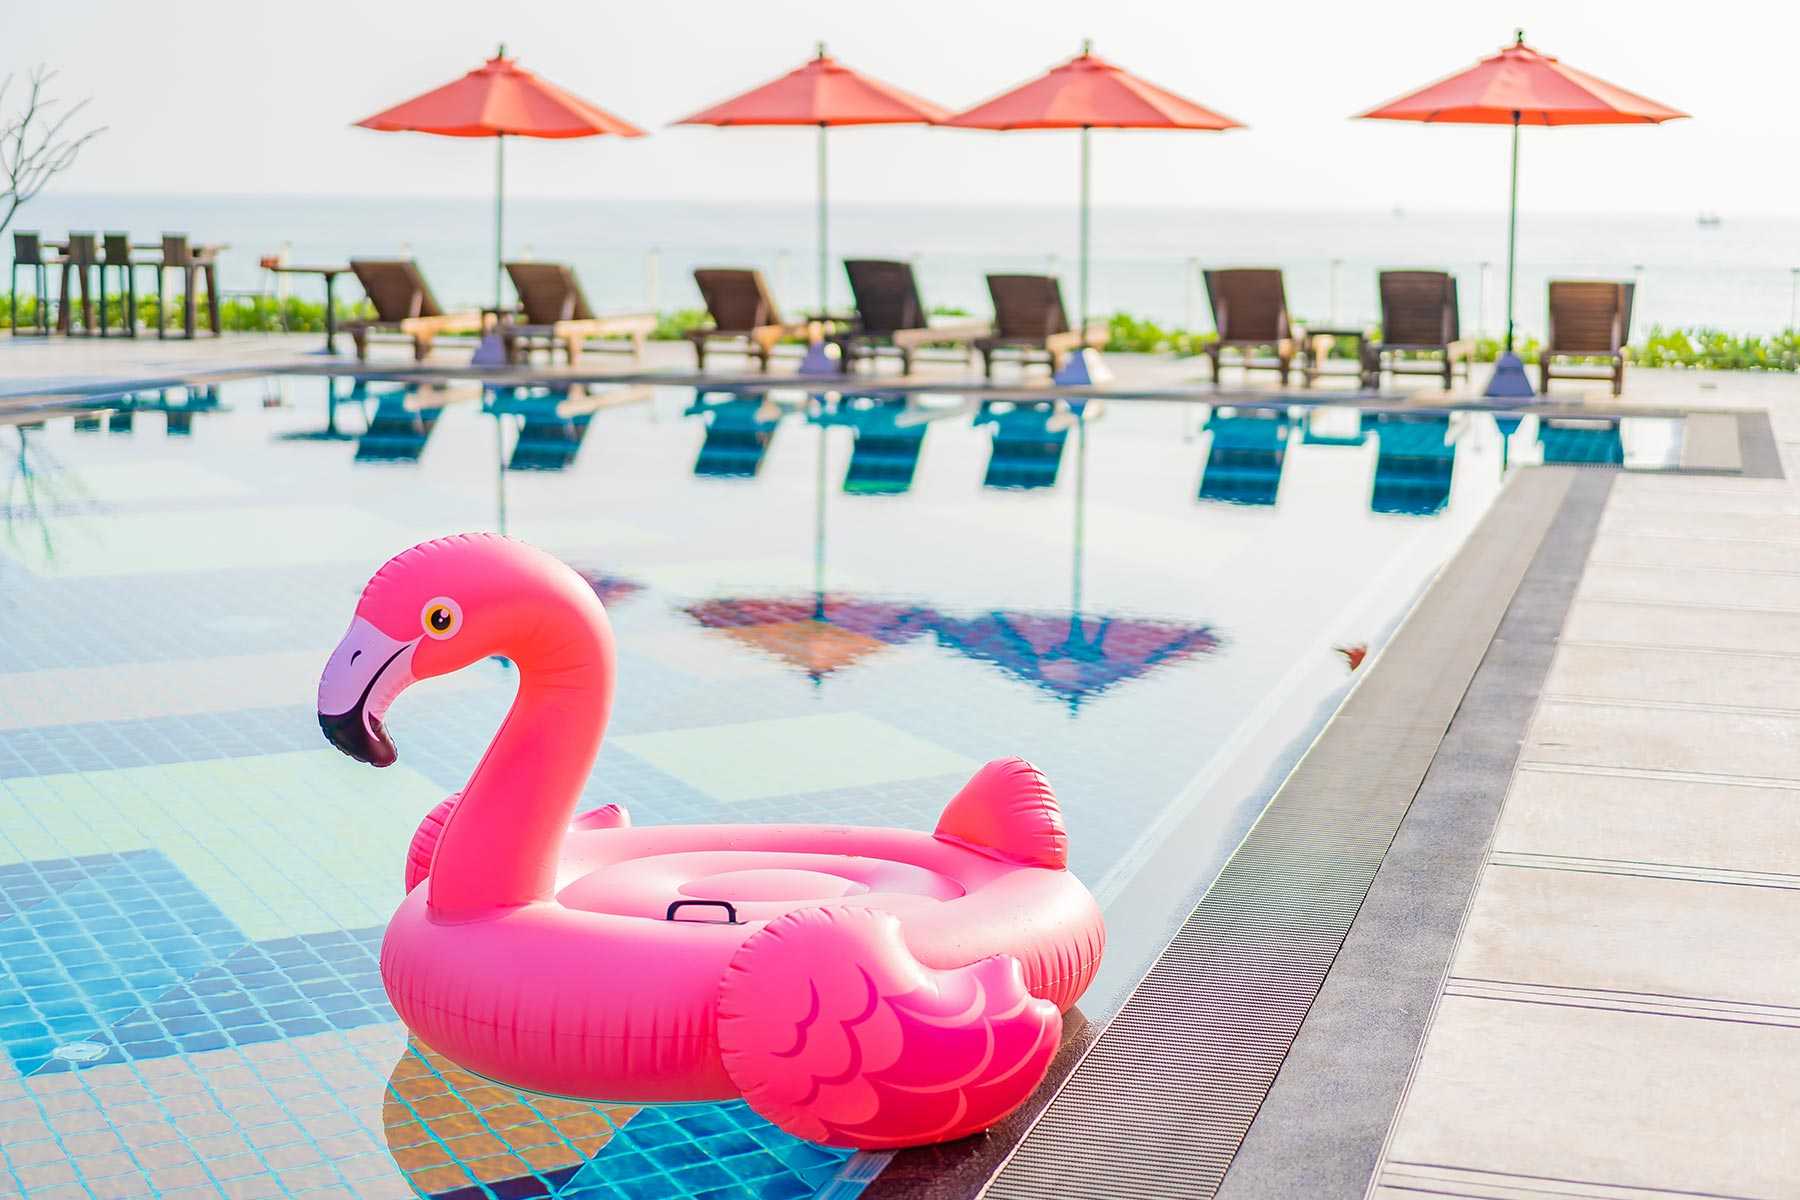 flamingo-float-around-swimming-pool-in-hotel-resor-8RE79VY.jpg